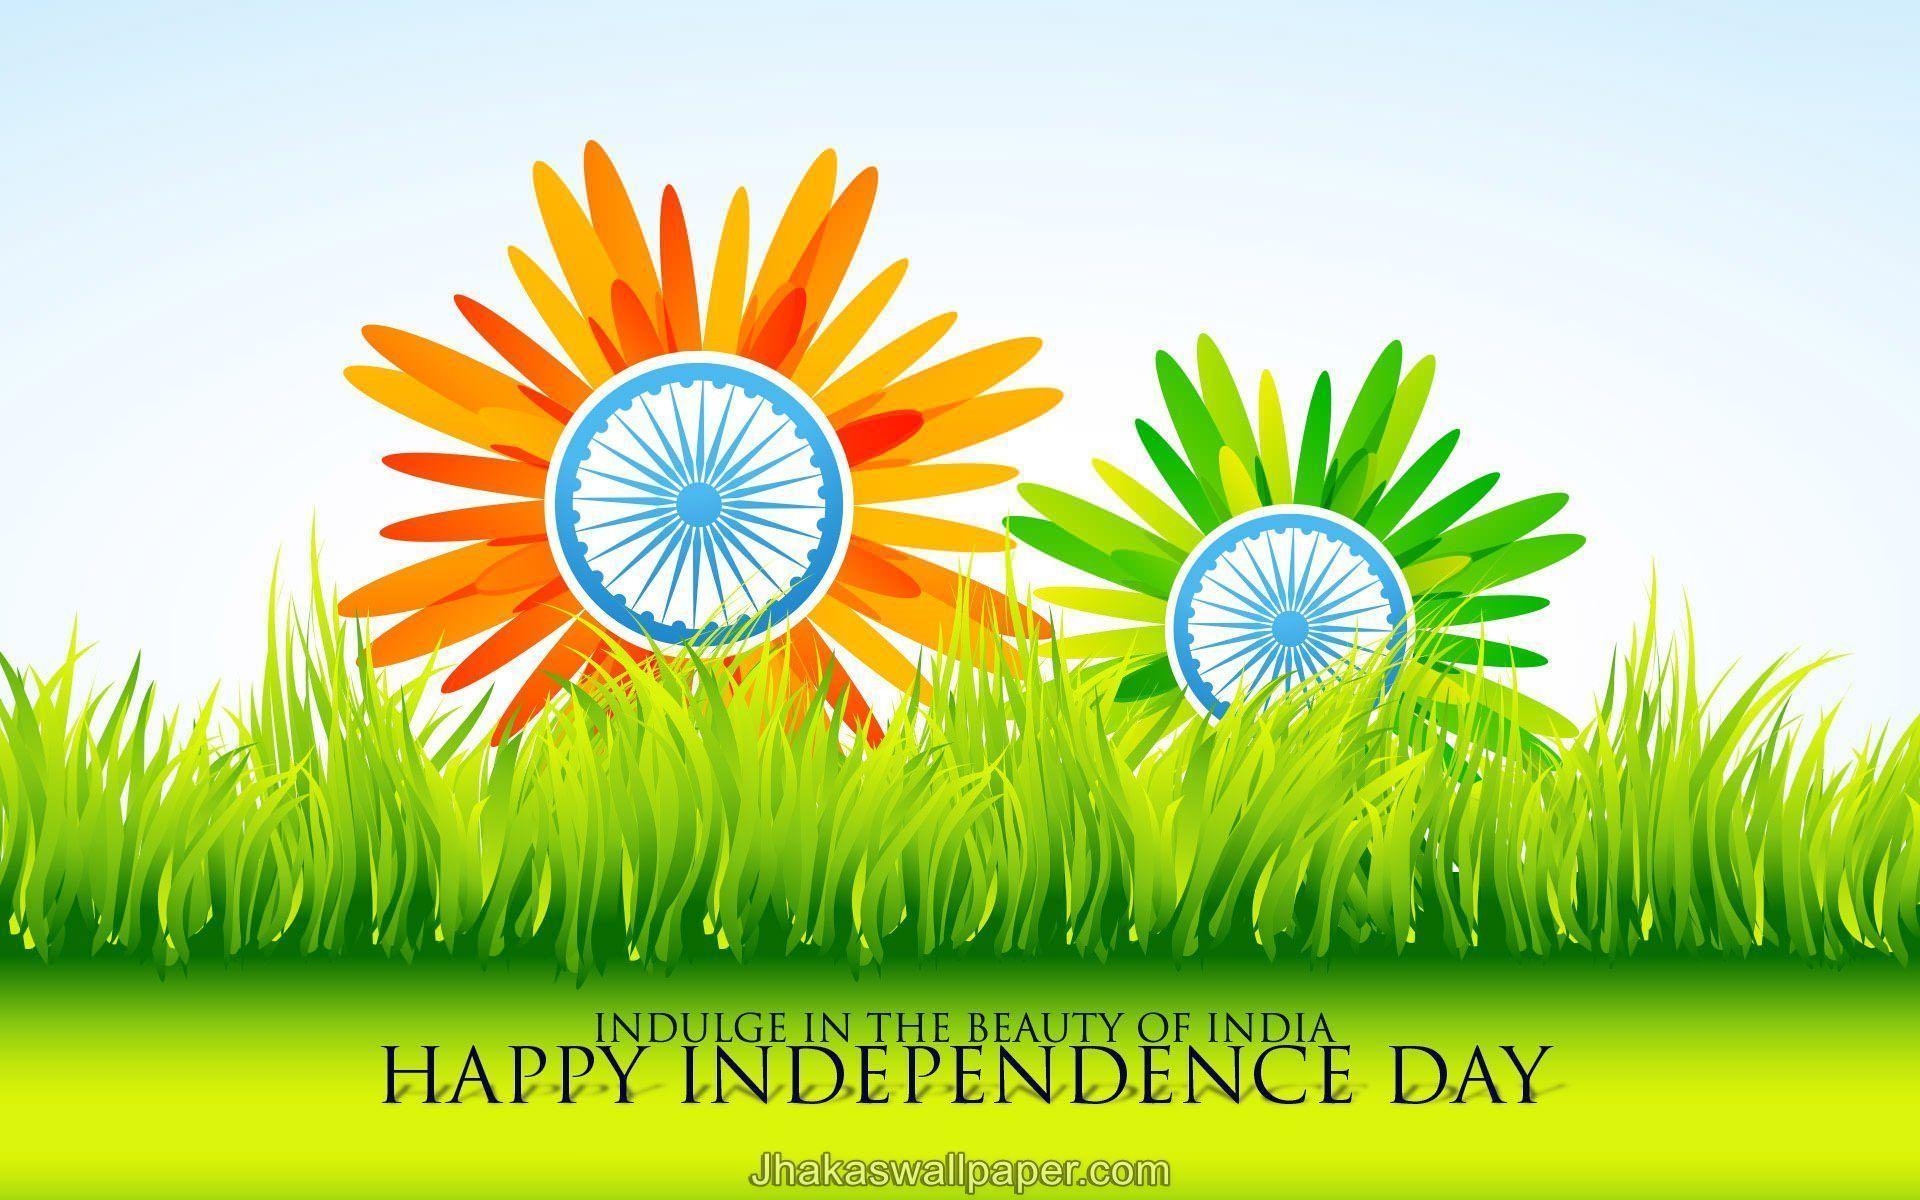 Happy Independence Day Wallpaper for Desktop. Jhakaswallpaper